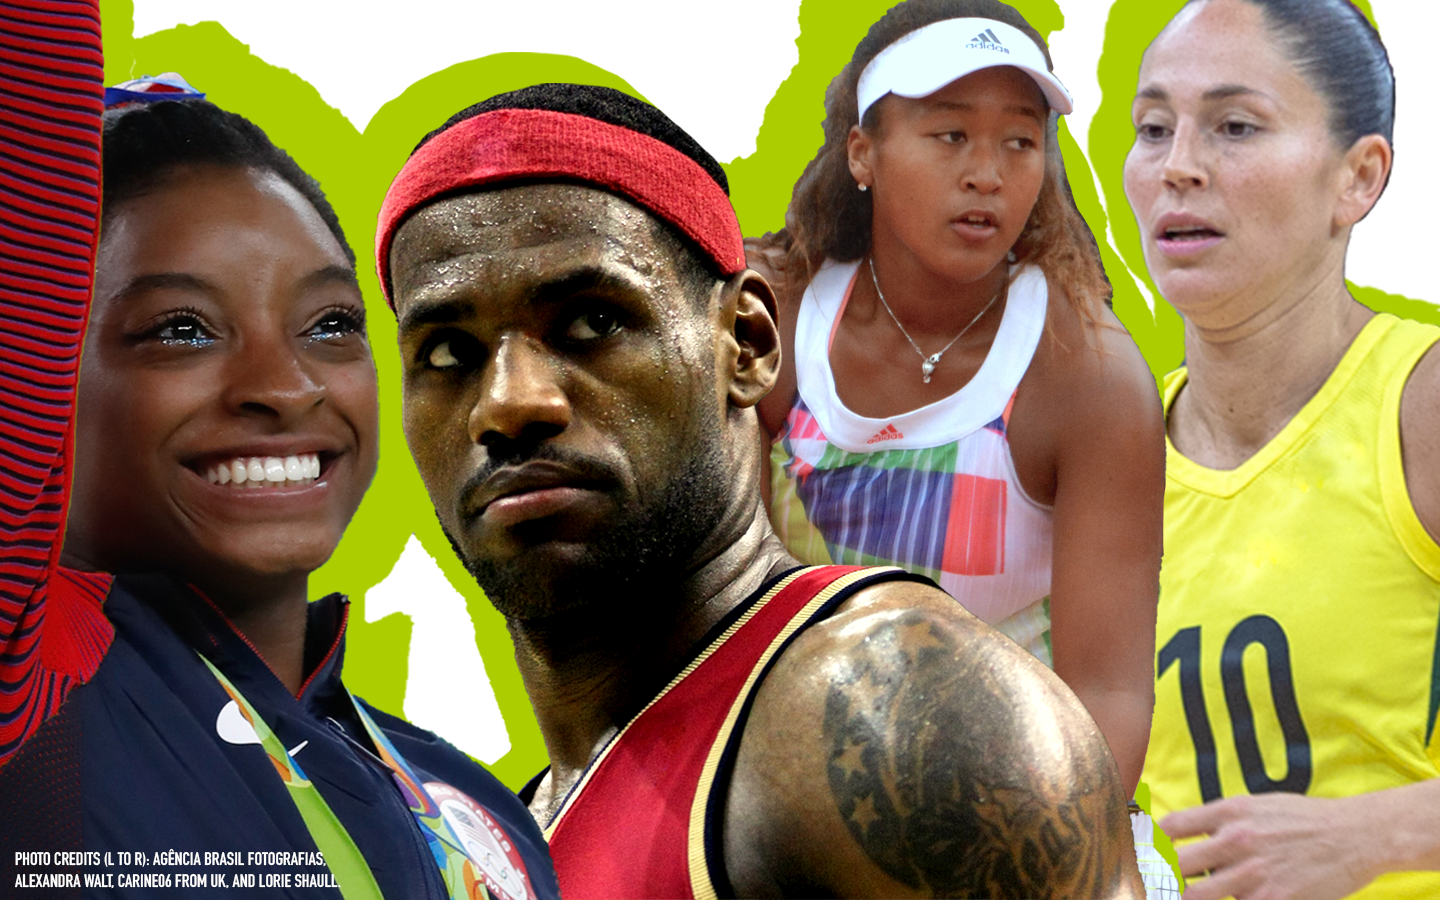 Various athletes including Simone Biles, Alan Iverson, Naomi Osaka, and a WNBA player